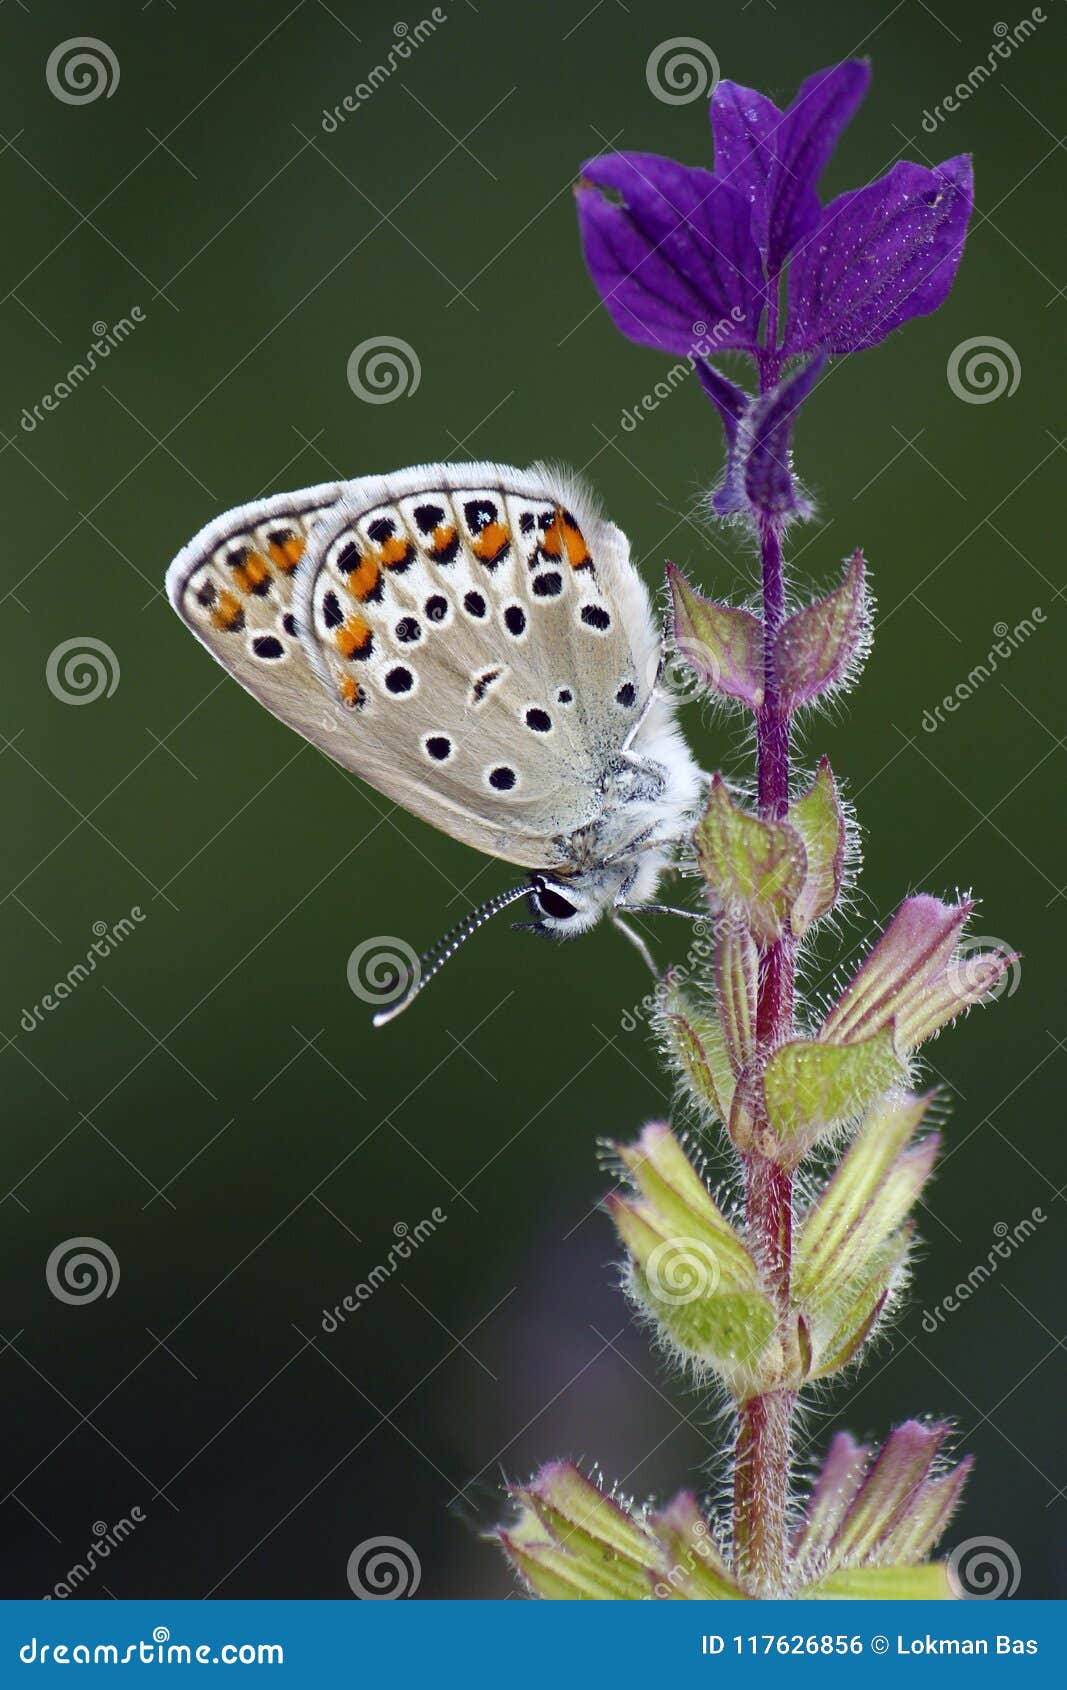 spotted butterfly on purple flowers